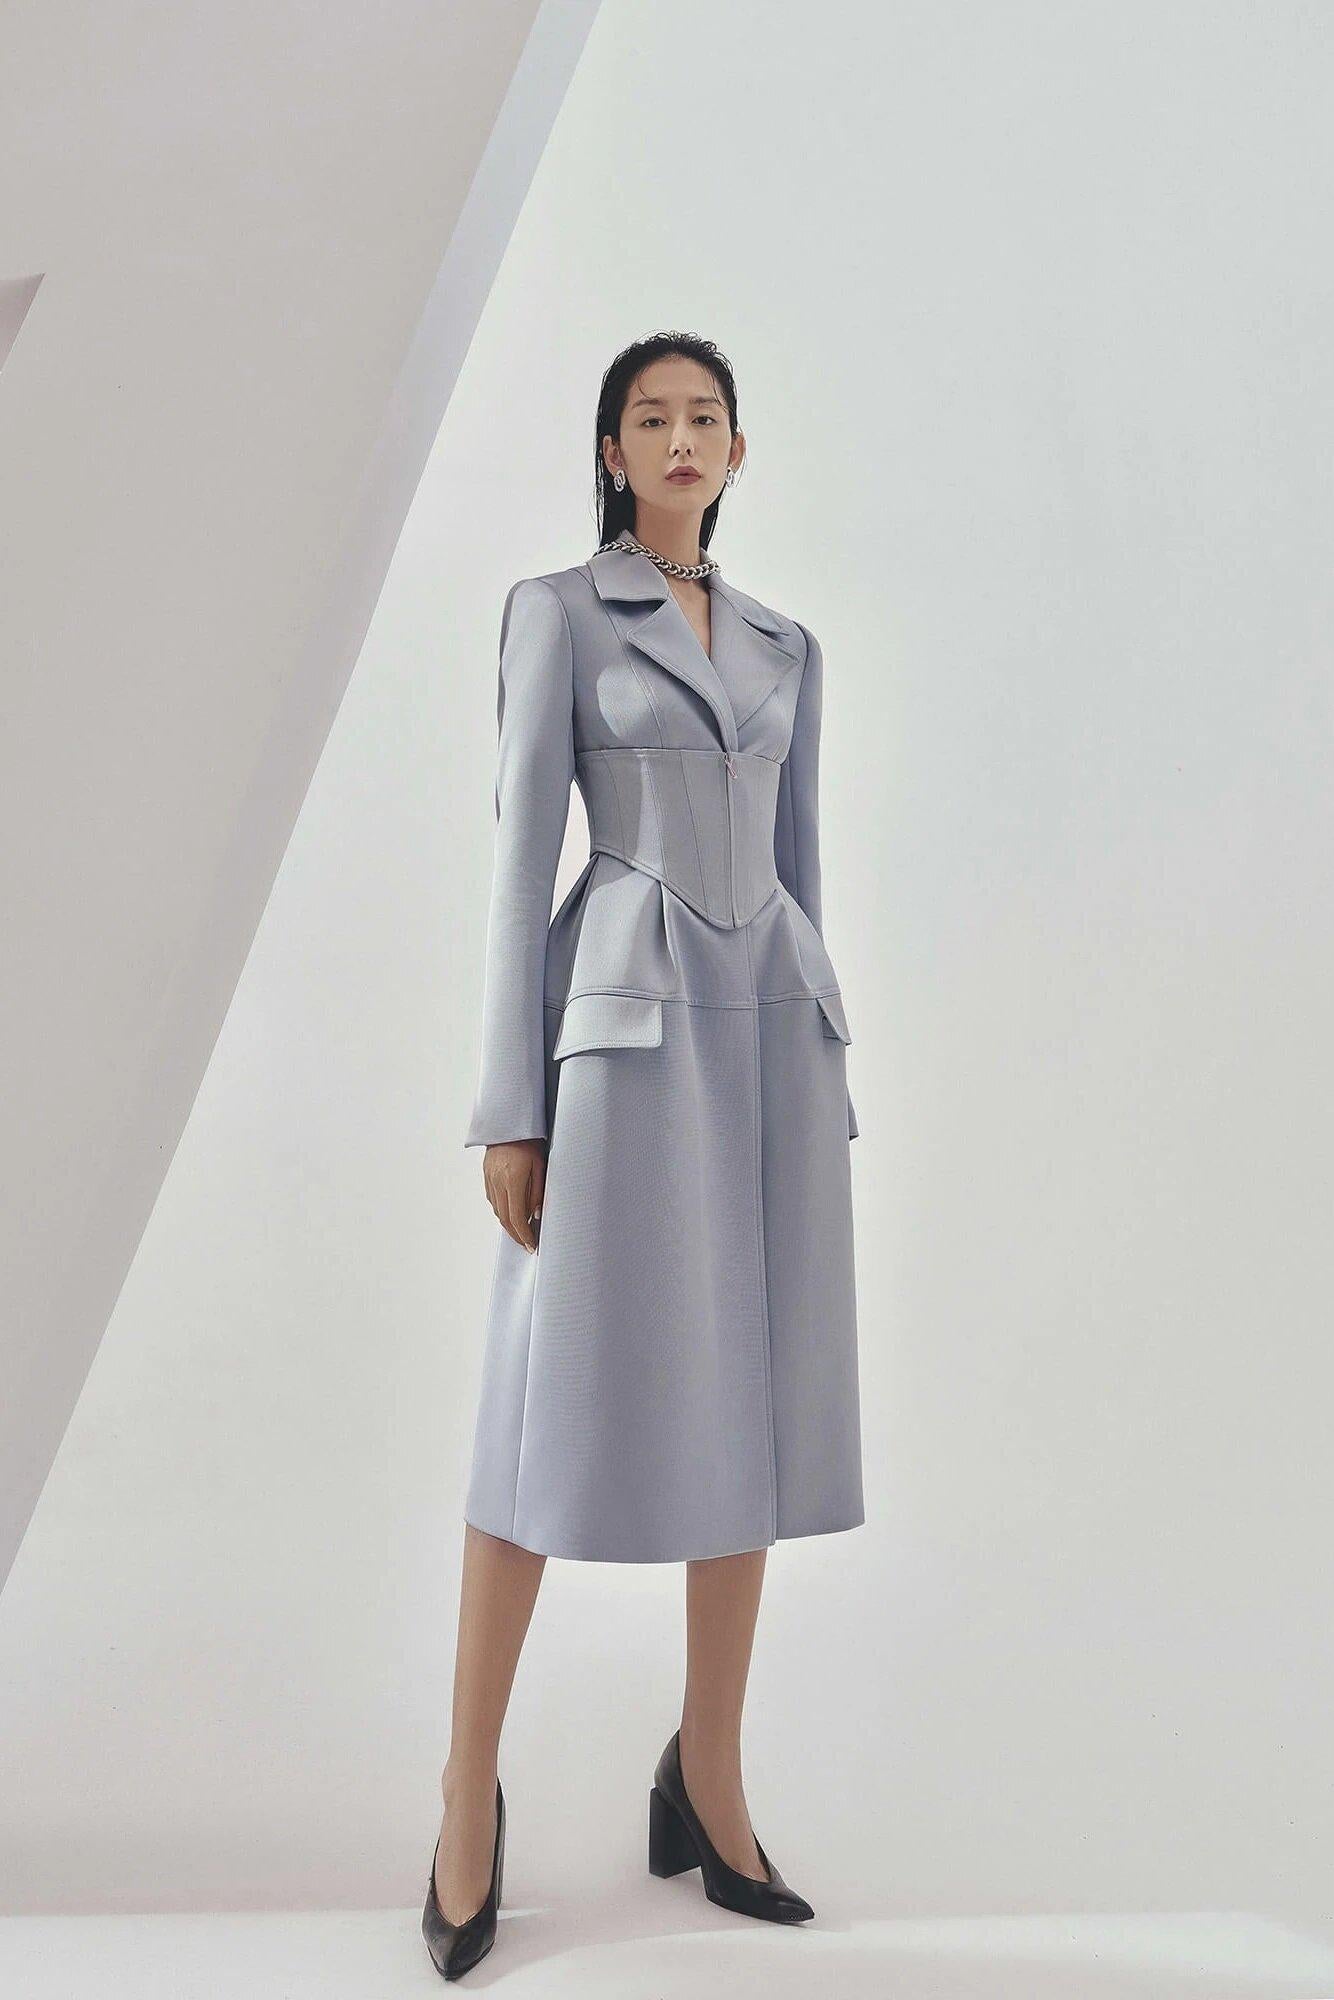 Designer tailored structured suit trench coat  suit dress -  Lap